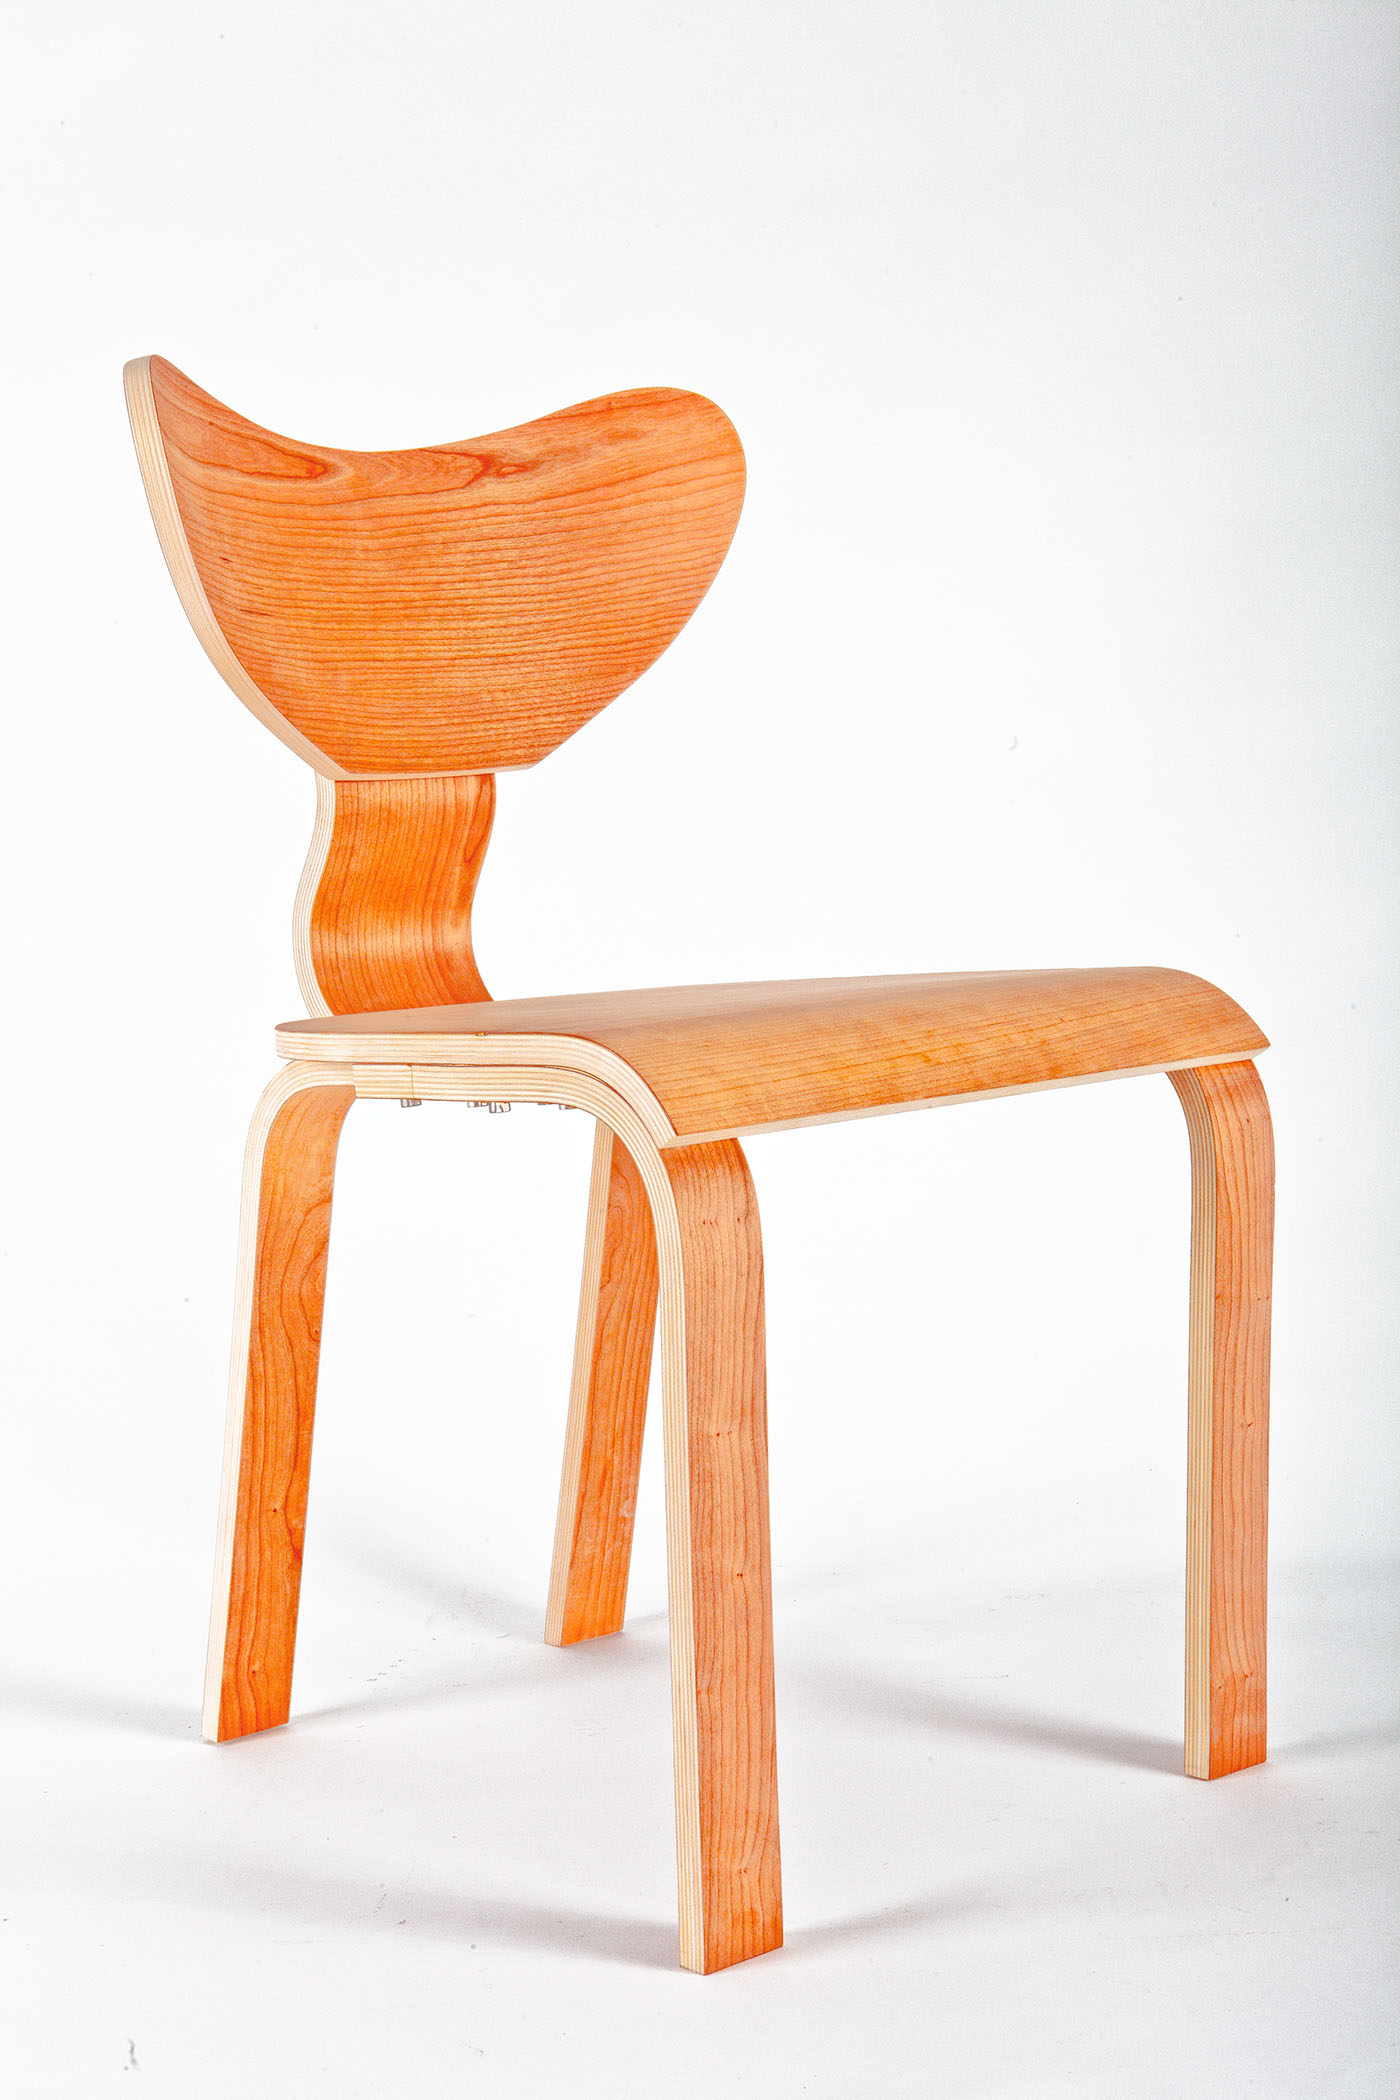 furniture wood chair cherry veneer design modern bentplywood flatpack